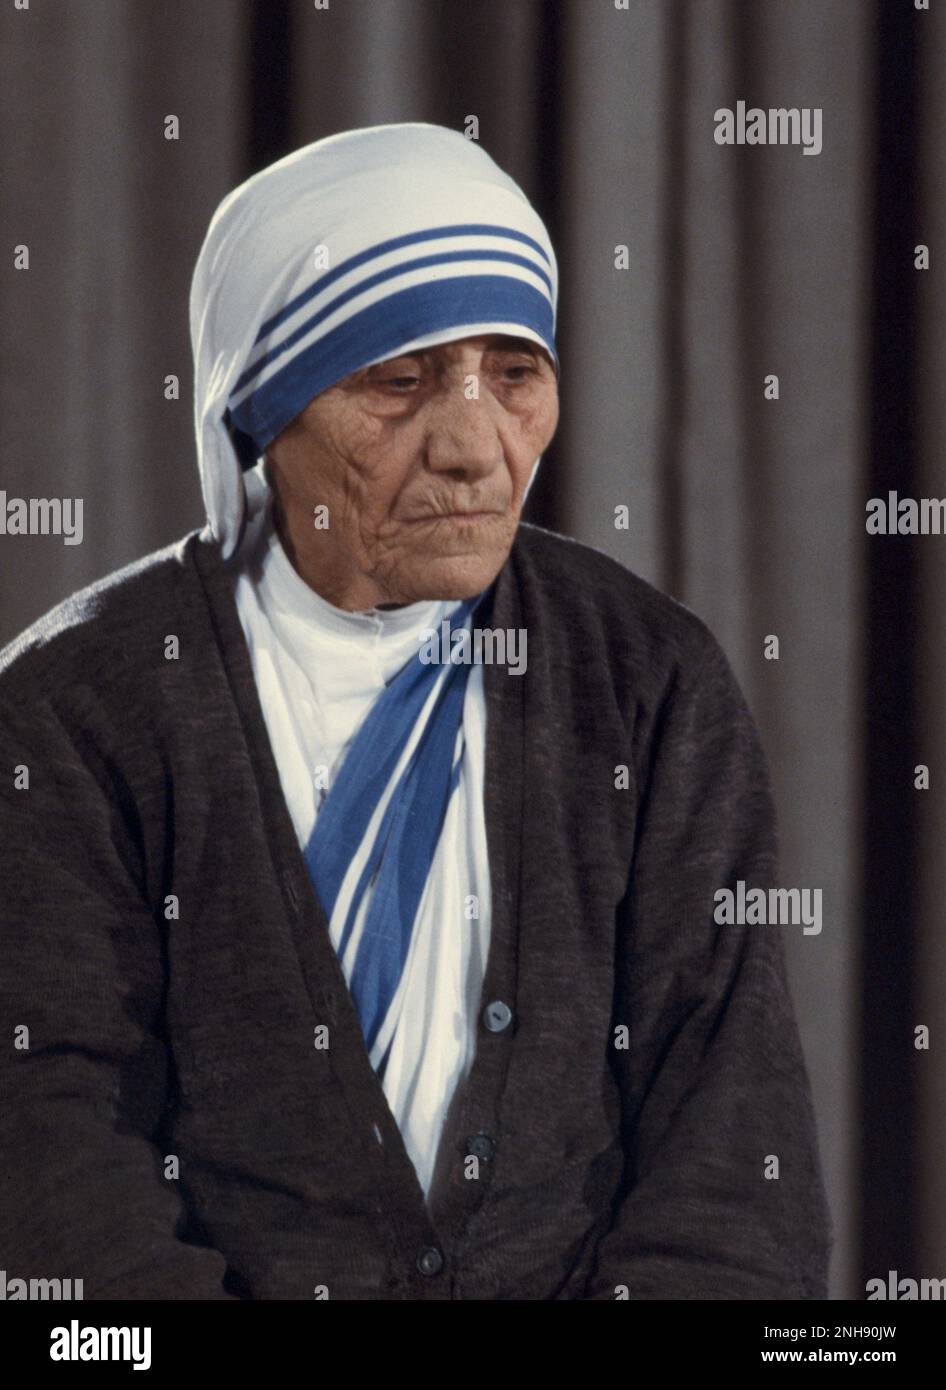 Mother Teresa in 1971. Mother Teresa (1910-1997), honoured in the Catholic Church as Saint Teresa of Calcutta, was an Albanian-Indian Roman Catholic nun and missionary. Photograph by Bernard Gotfryd. Stock Photo